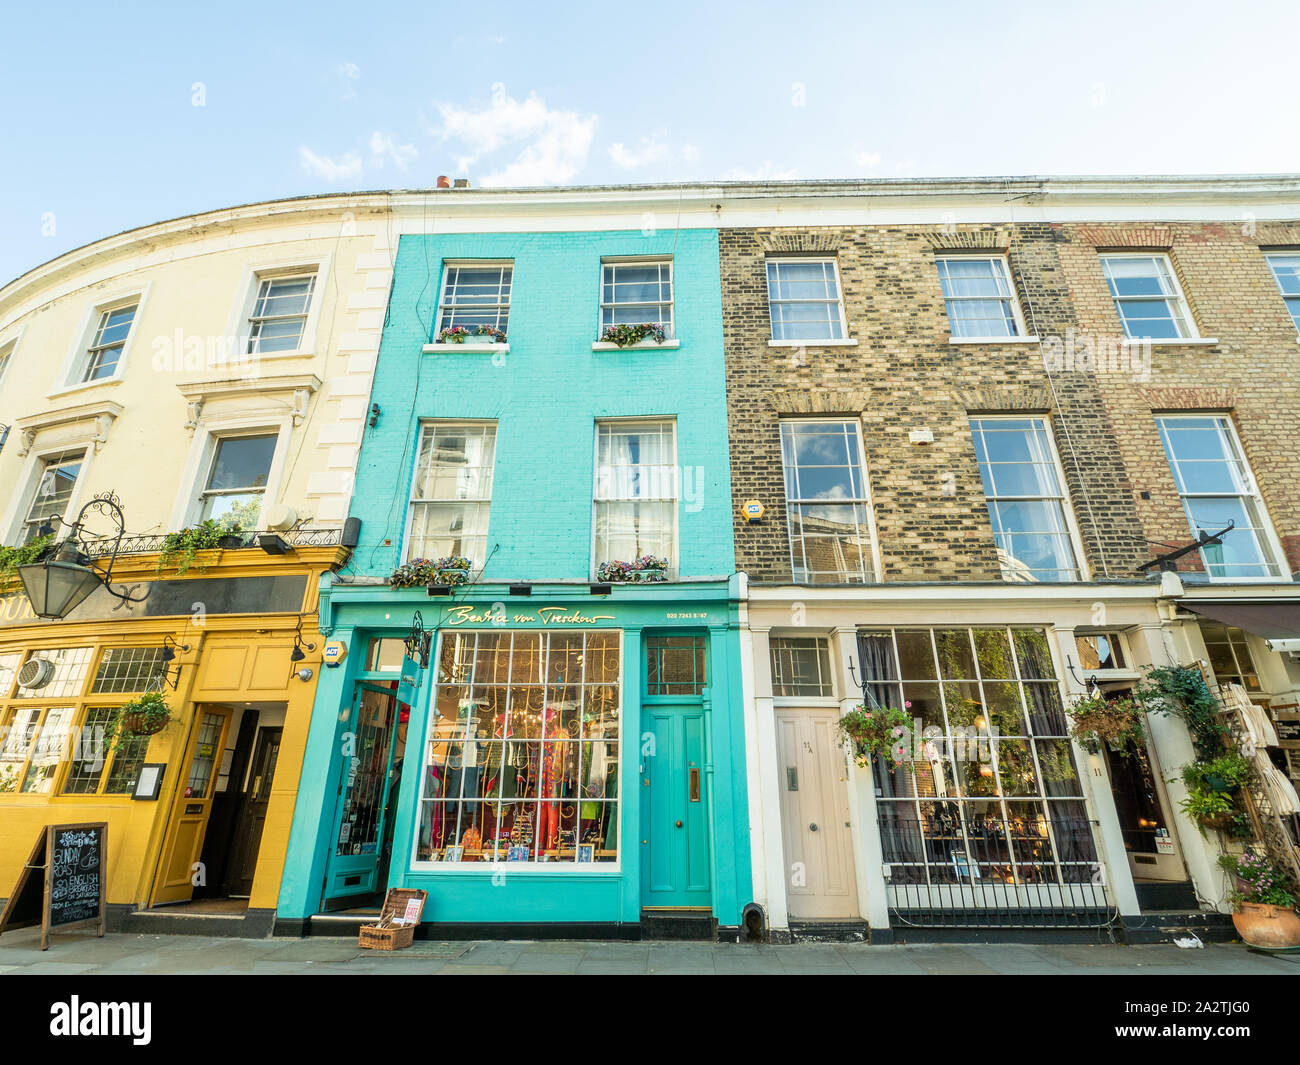 Quaint and colourful shops on Portabello road, Notting Hill, London. Sun in Splendour pub on the left. Stock Photo